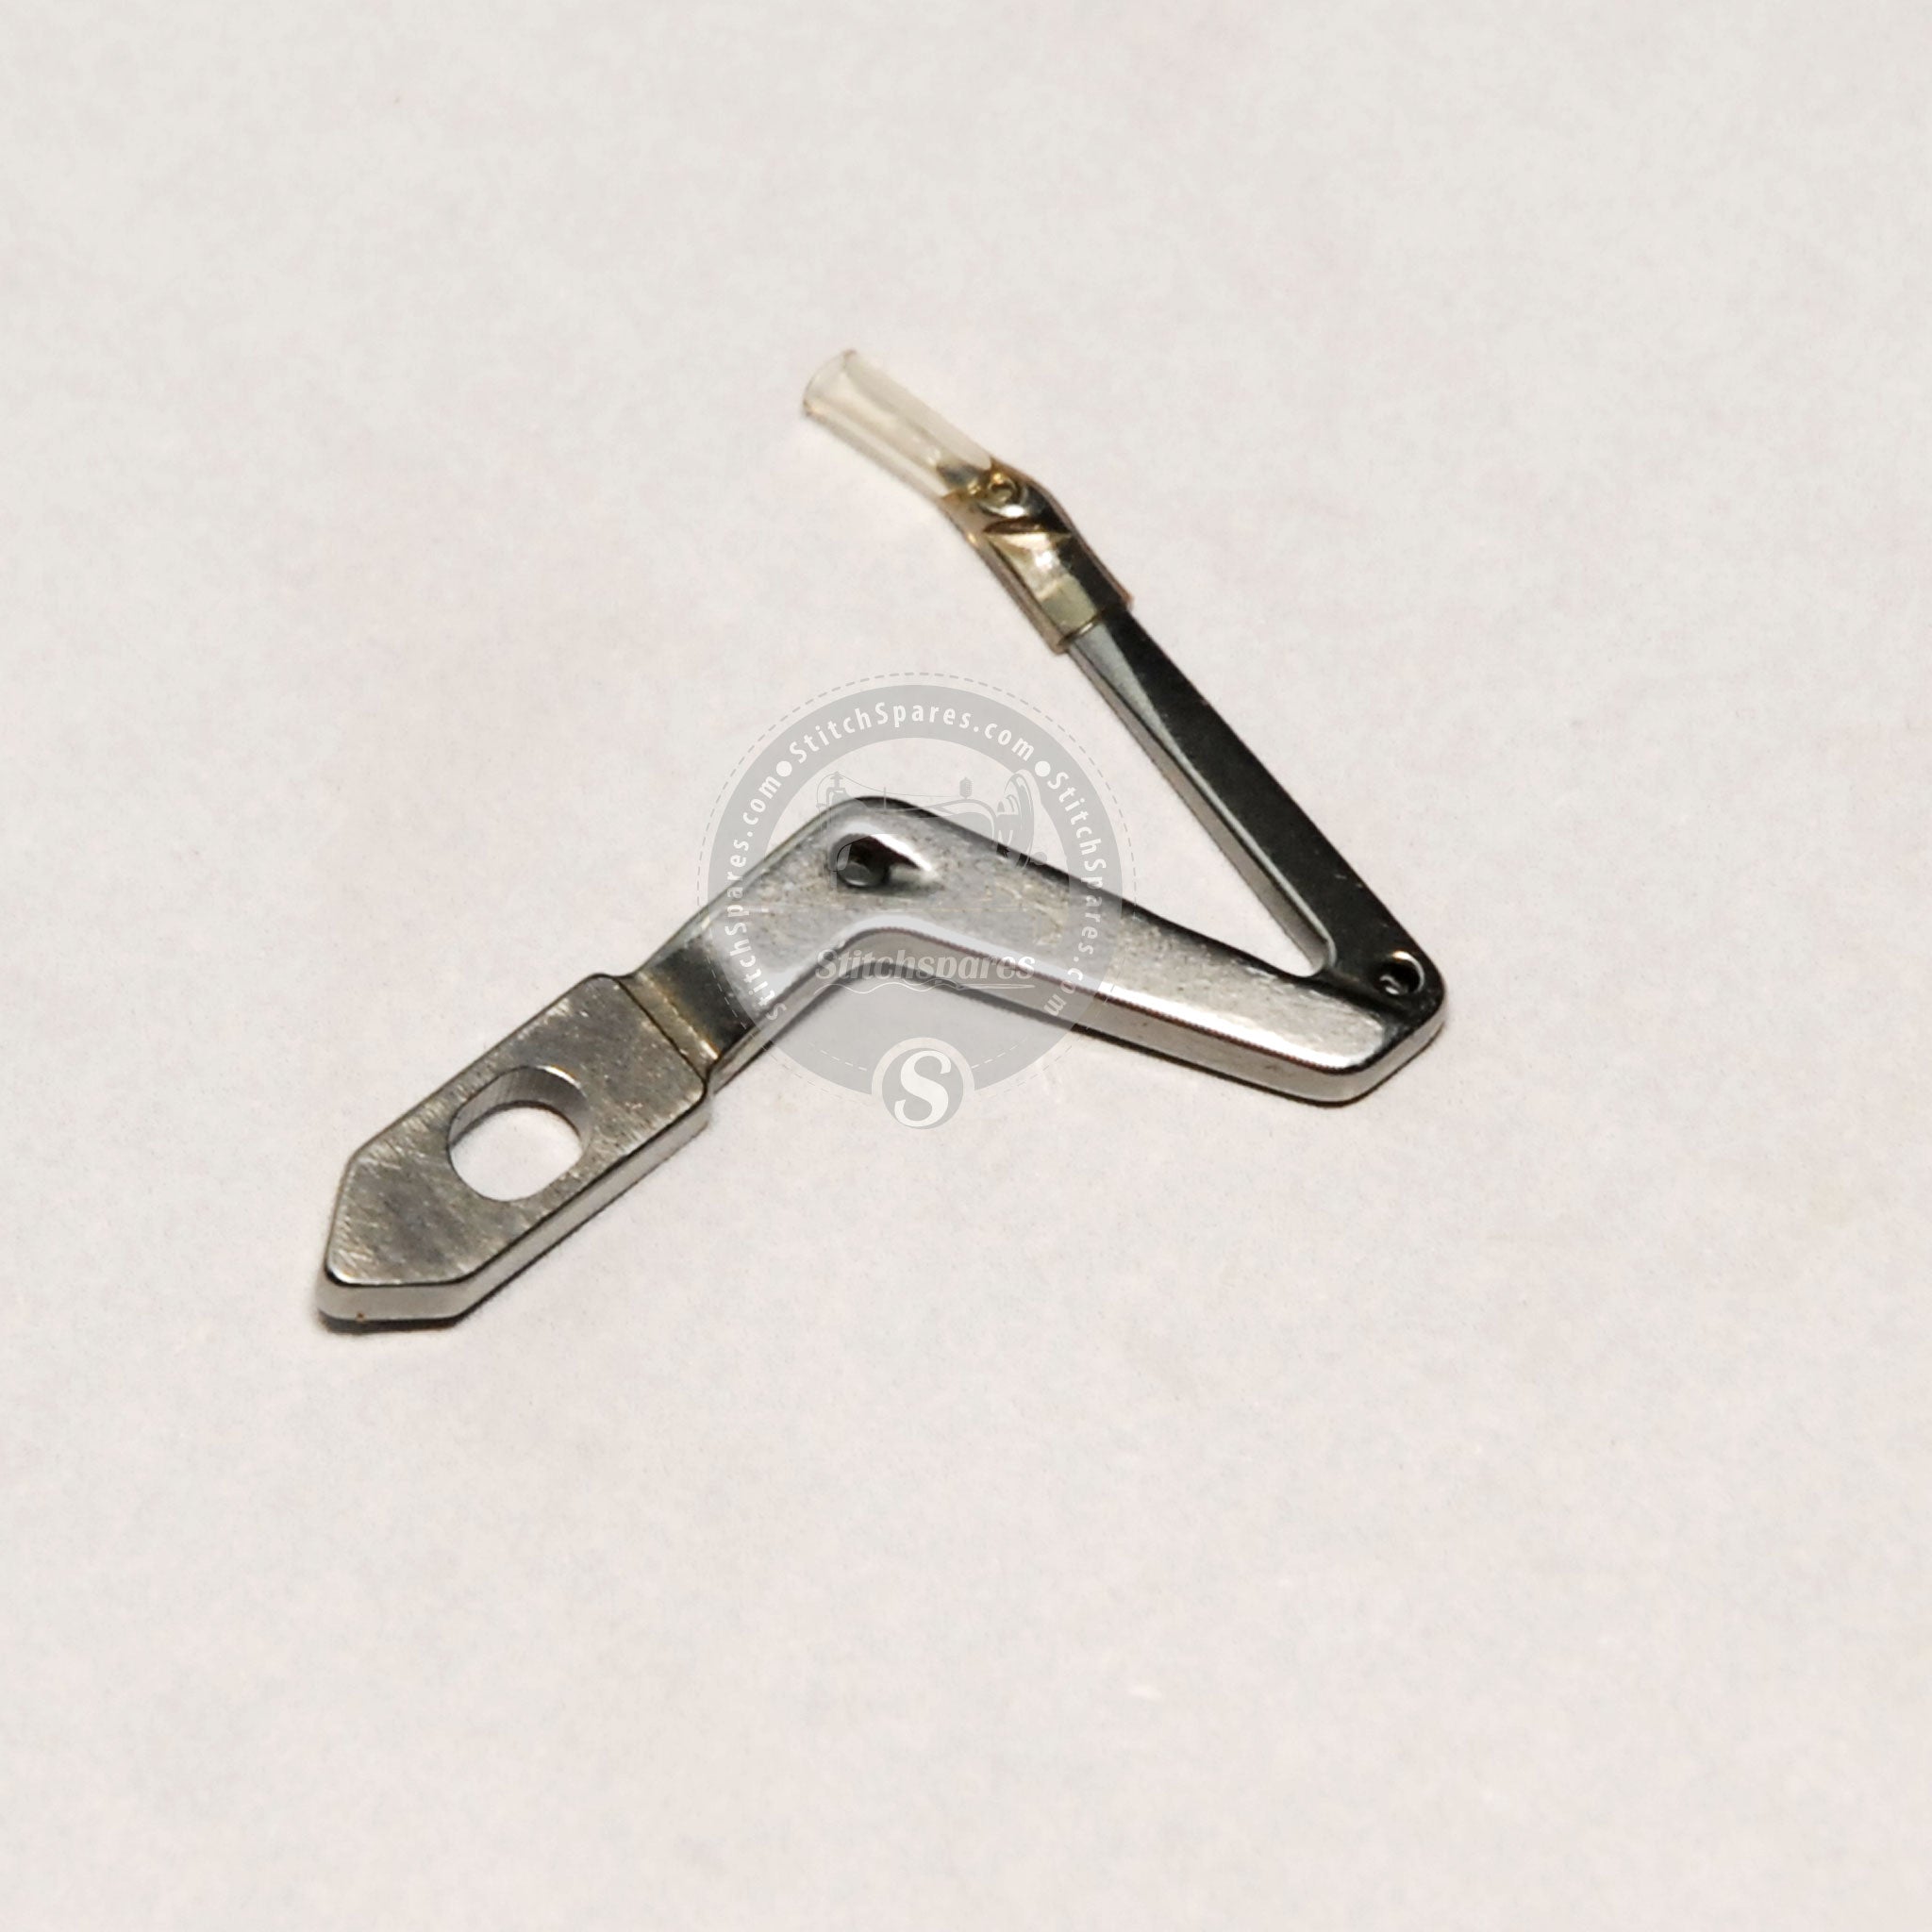 Looper superior 20717004 para piezas de máquina de coser JACK E4, E4S Overlock